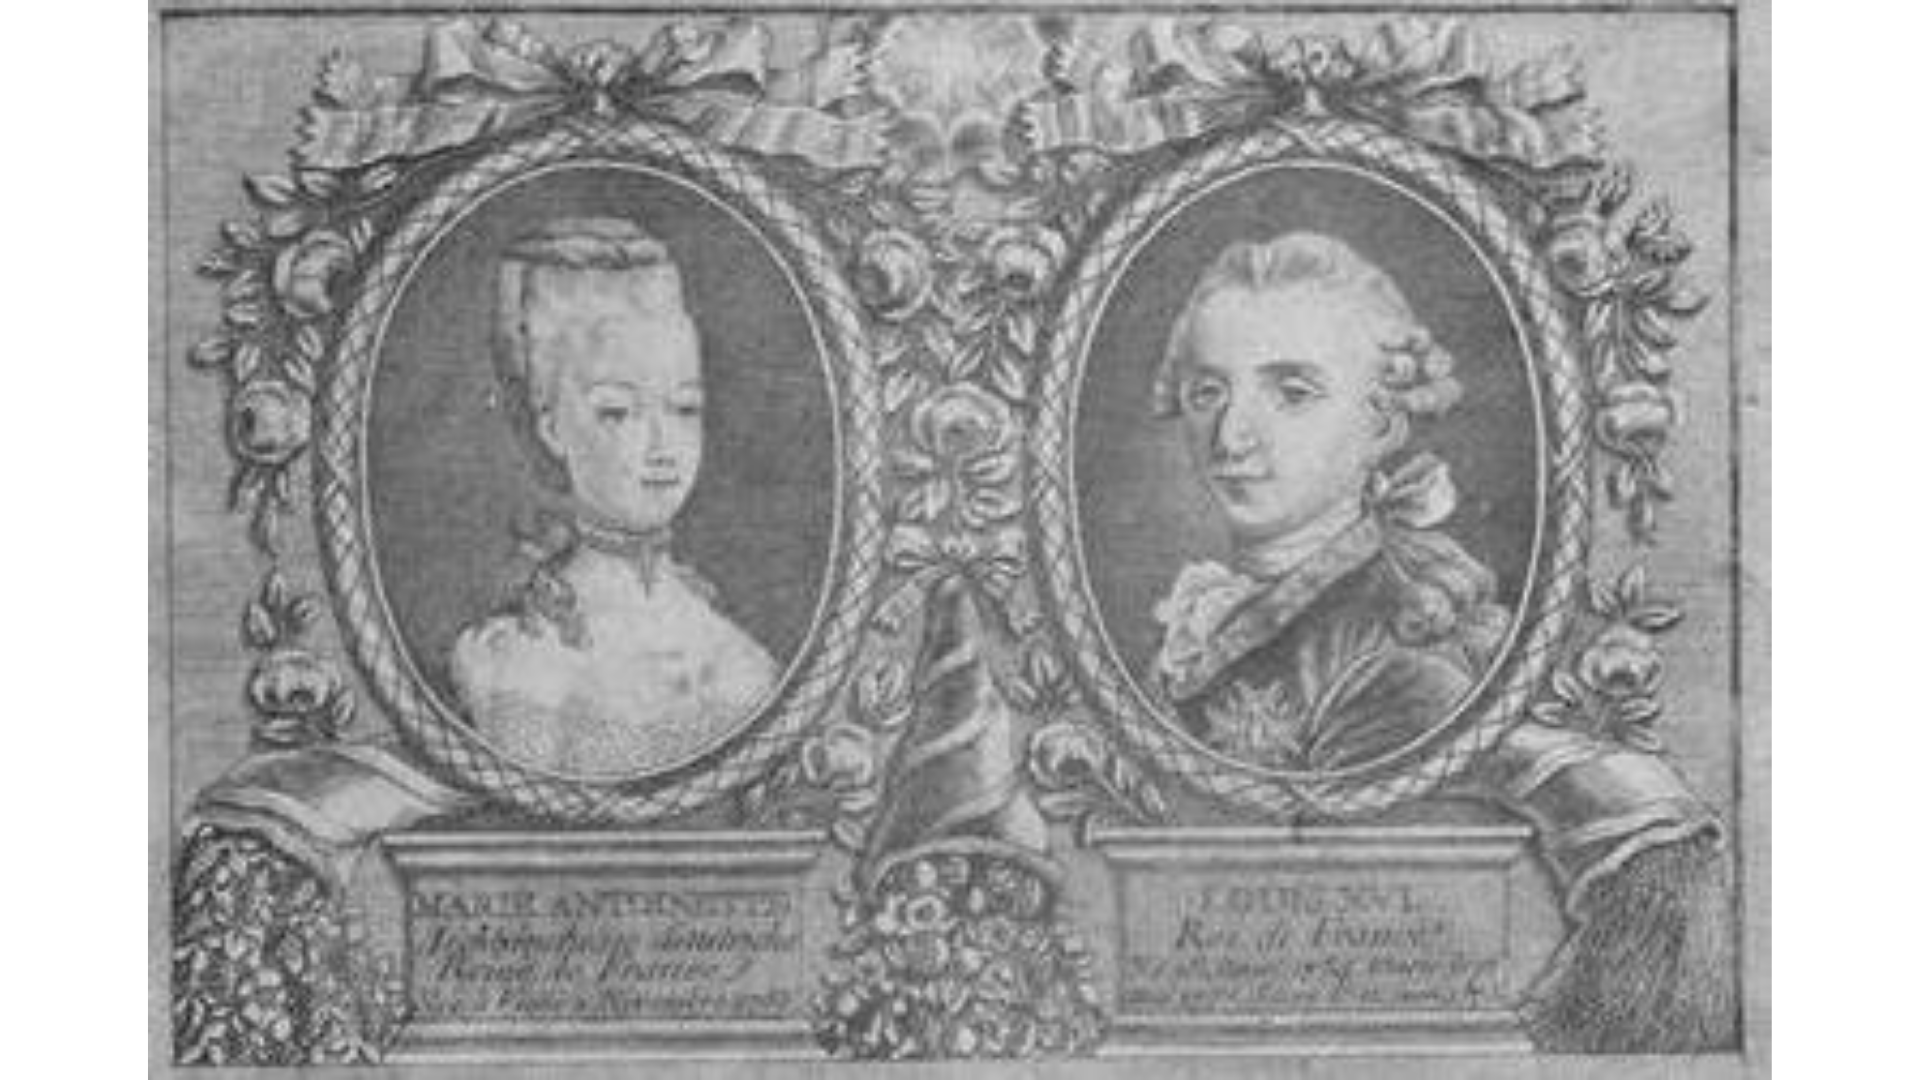 Portrait of Marie Antoinette and Louis XVI